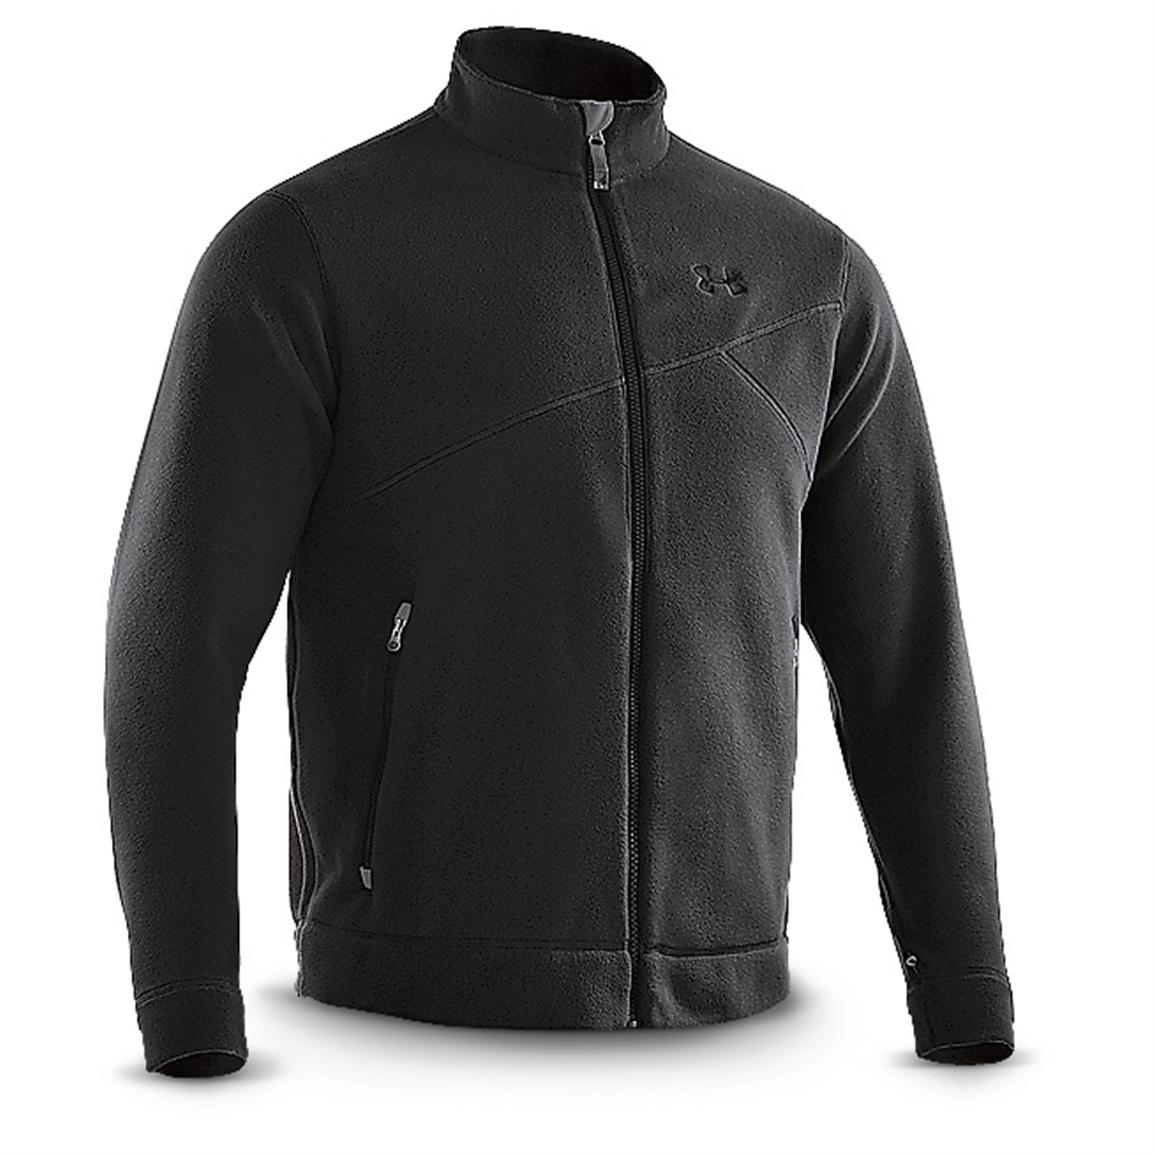 Under ArmourÂ® ColdGearÂ® Fleece Component Jacket - 205050, Insulated Jackets & Coats at Sportsman 